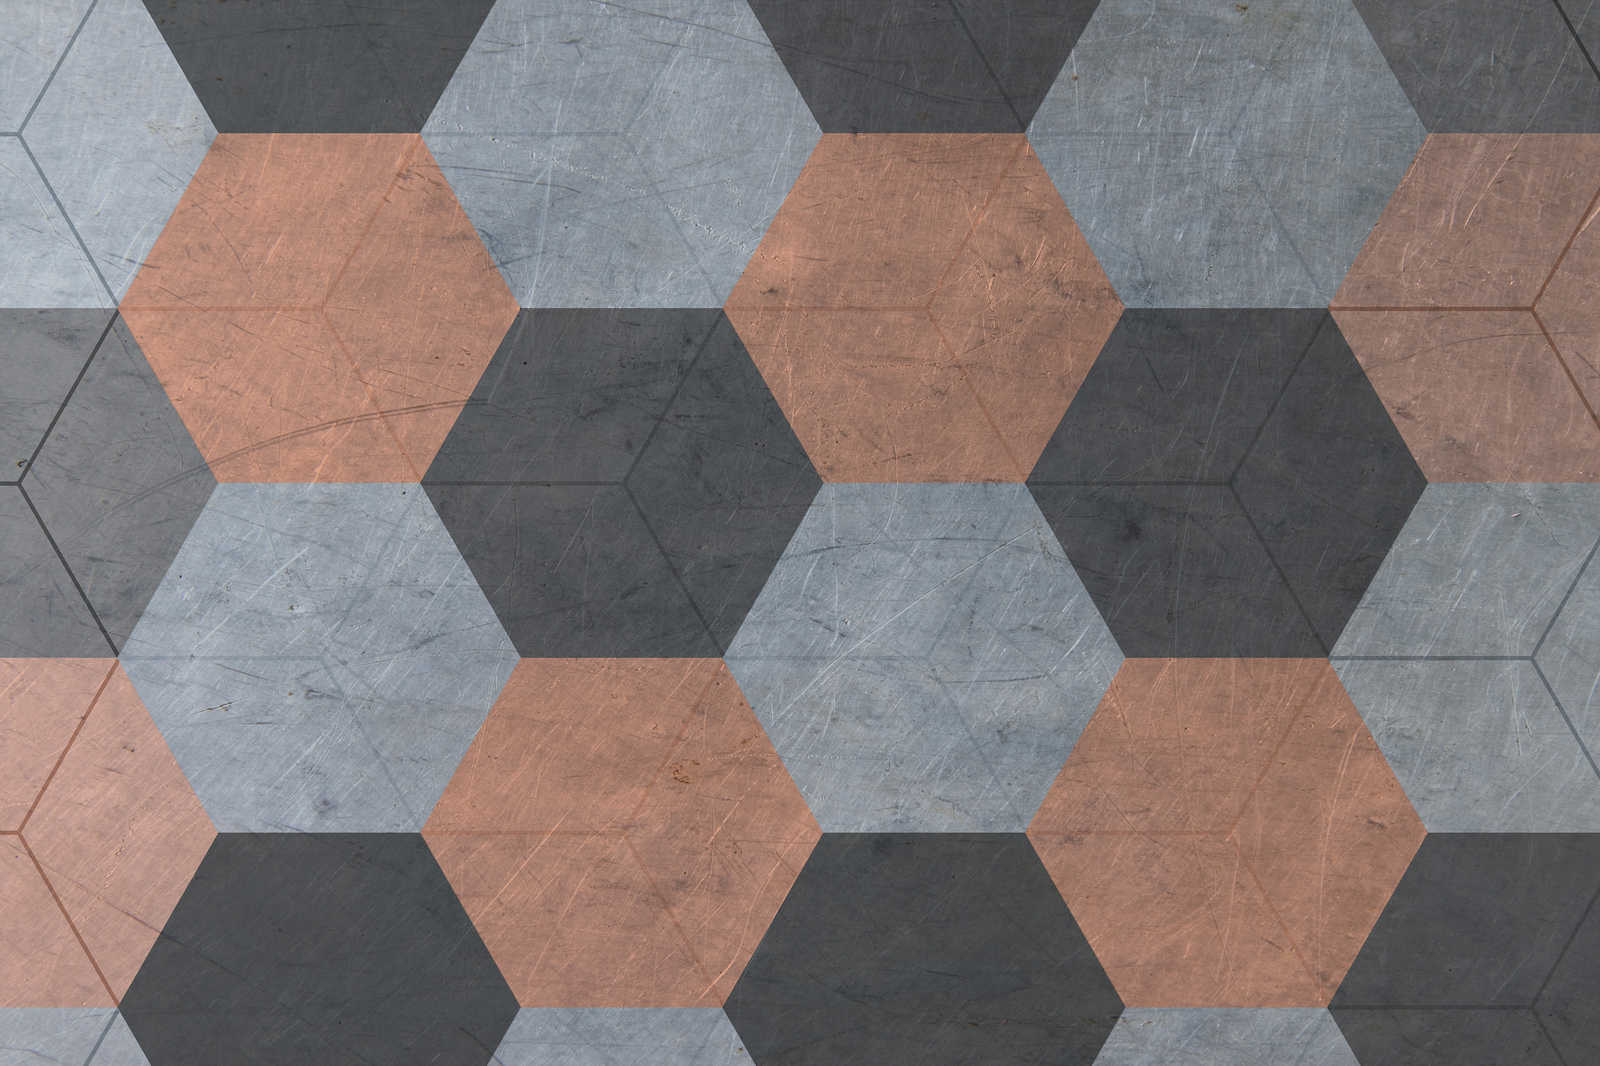             Leinwandbild mit Hexagon Kacheln im Vintage Stil – 0,90 m x 0,60 m
        